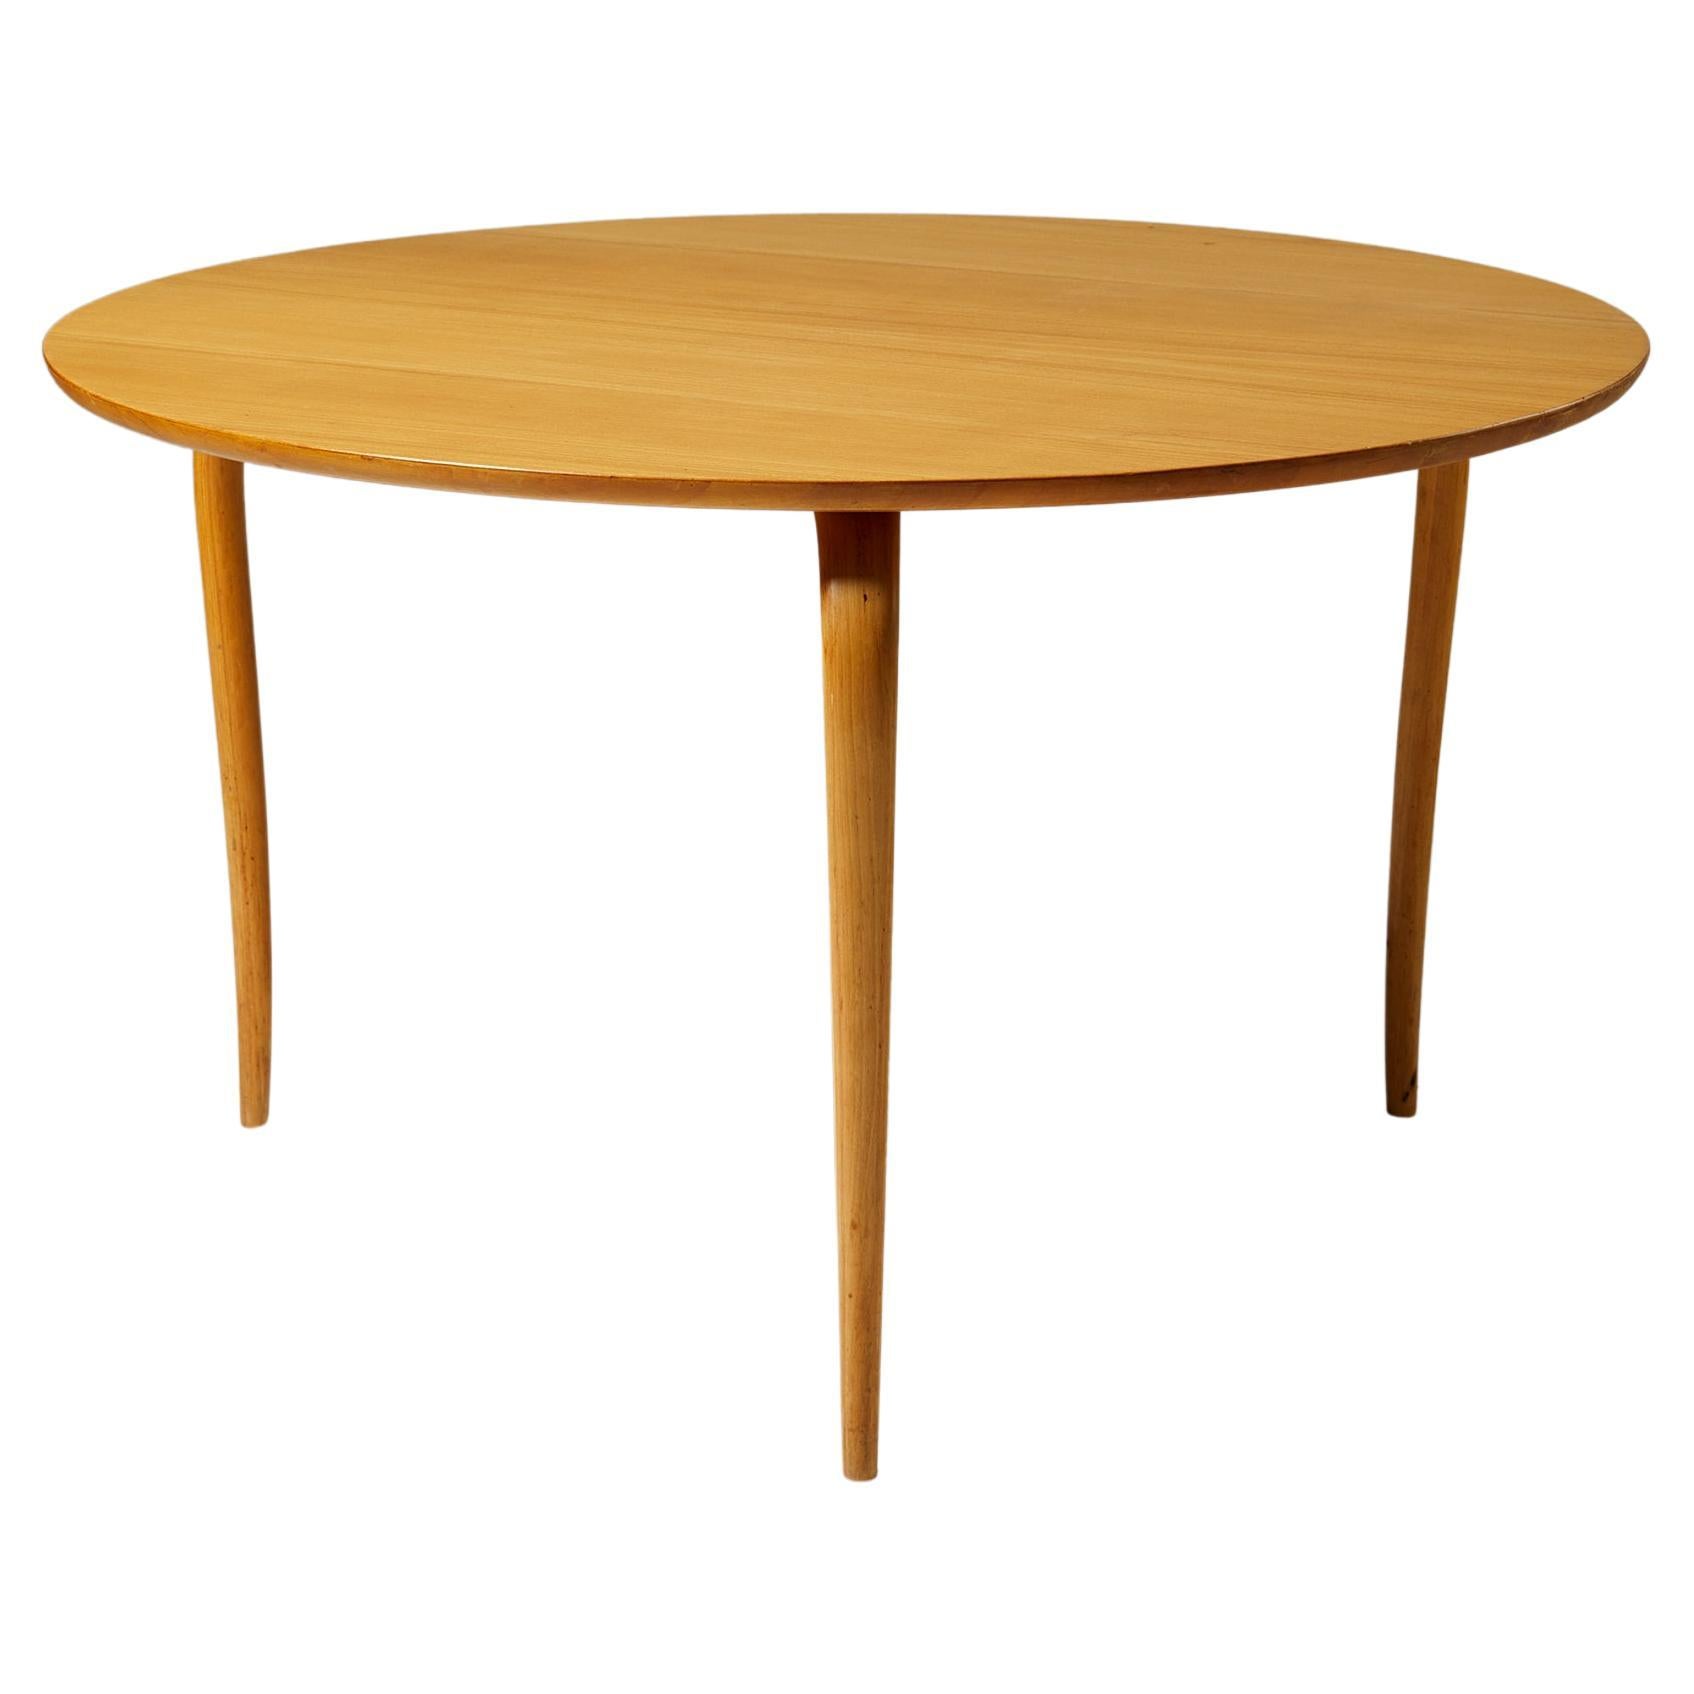 Table Annika Designed by Bruno Mathsson for Karl Mathsson, Sweden, 1936